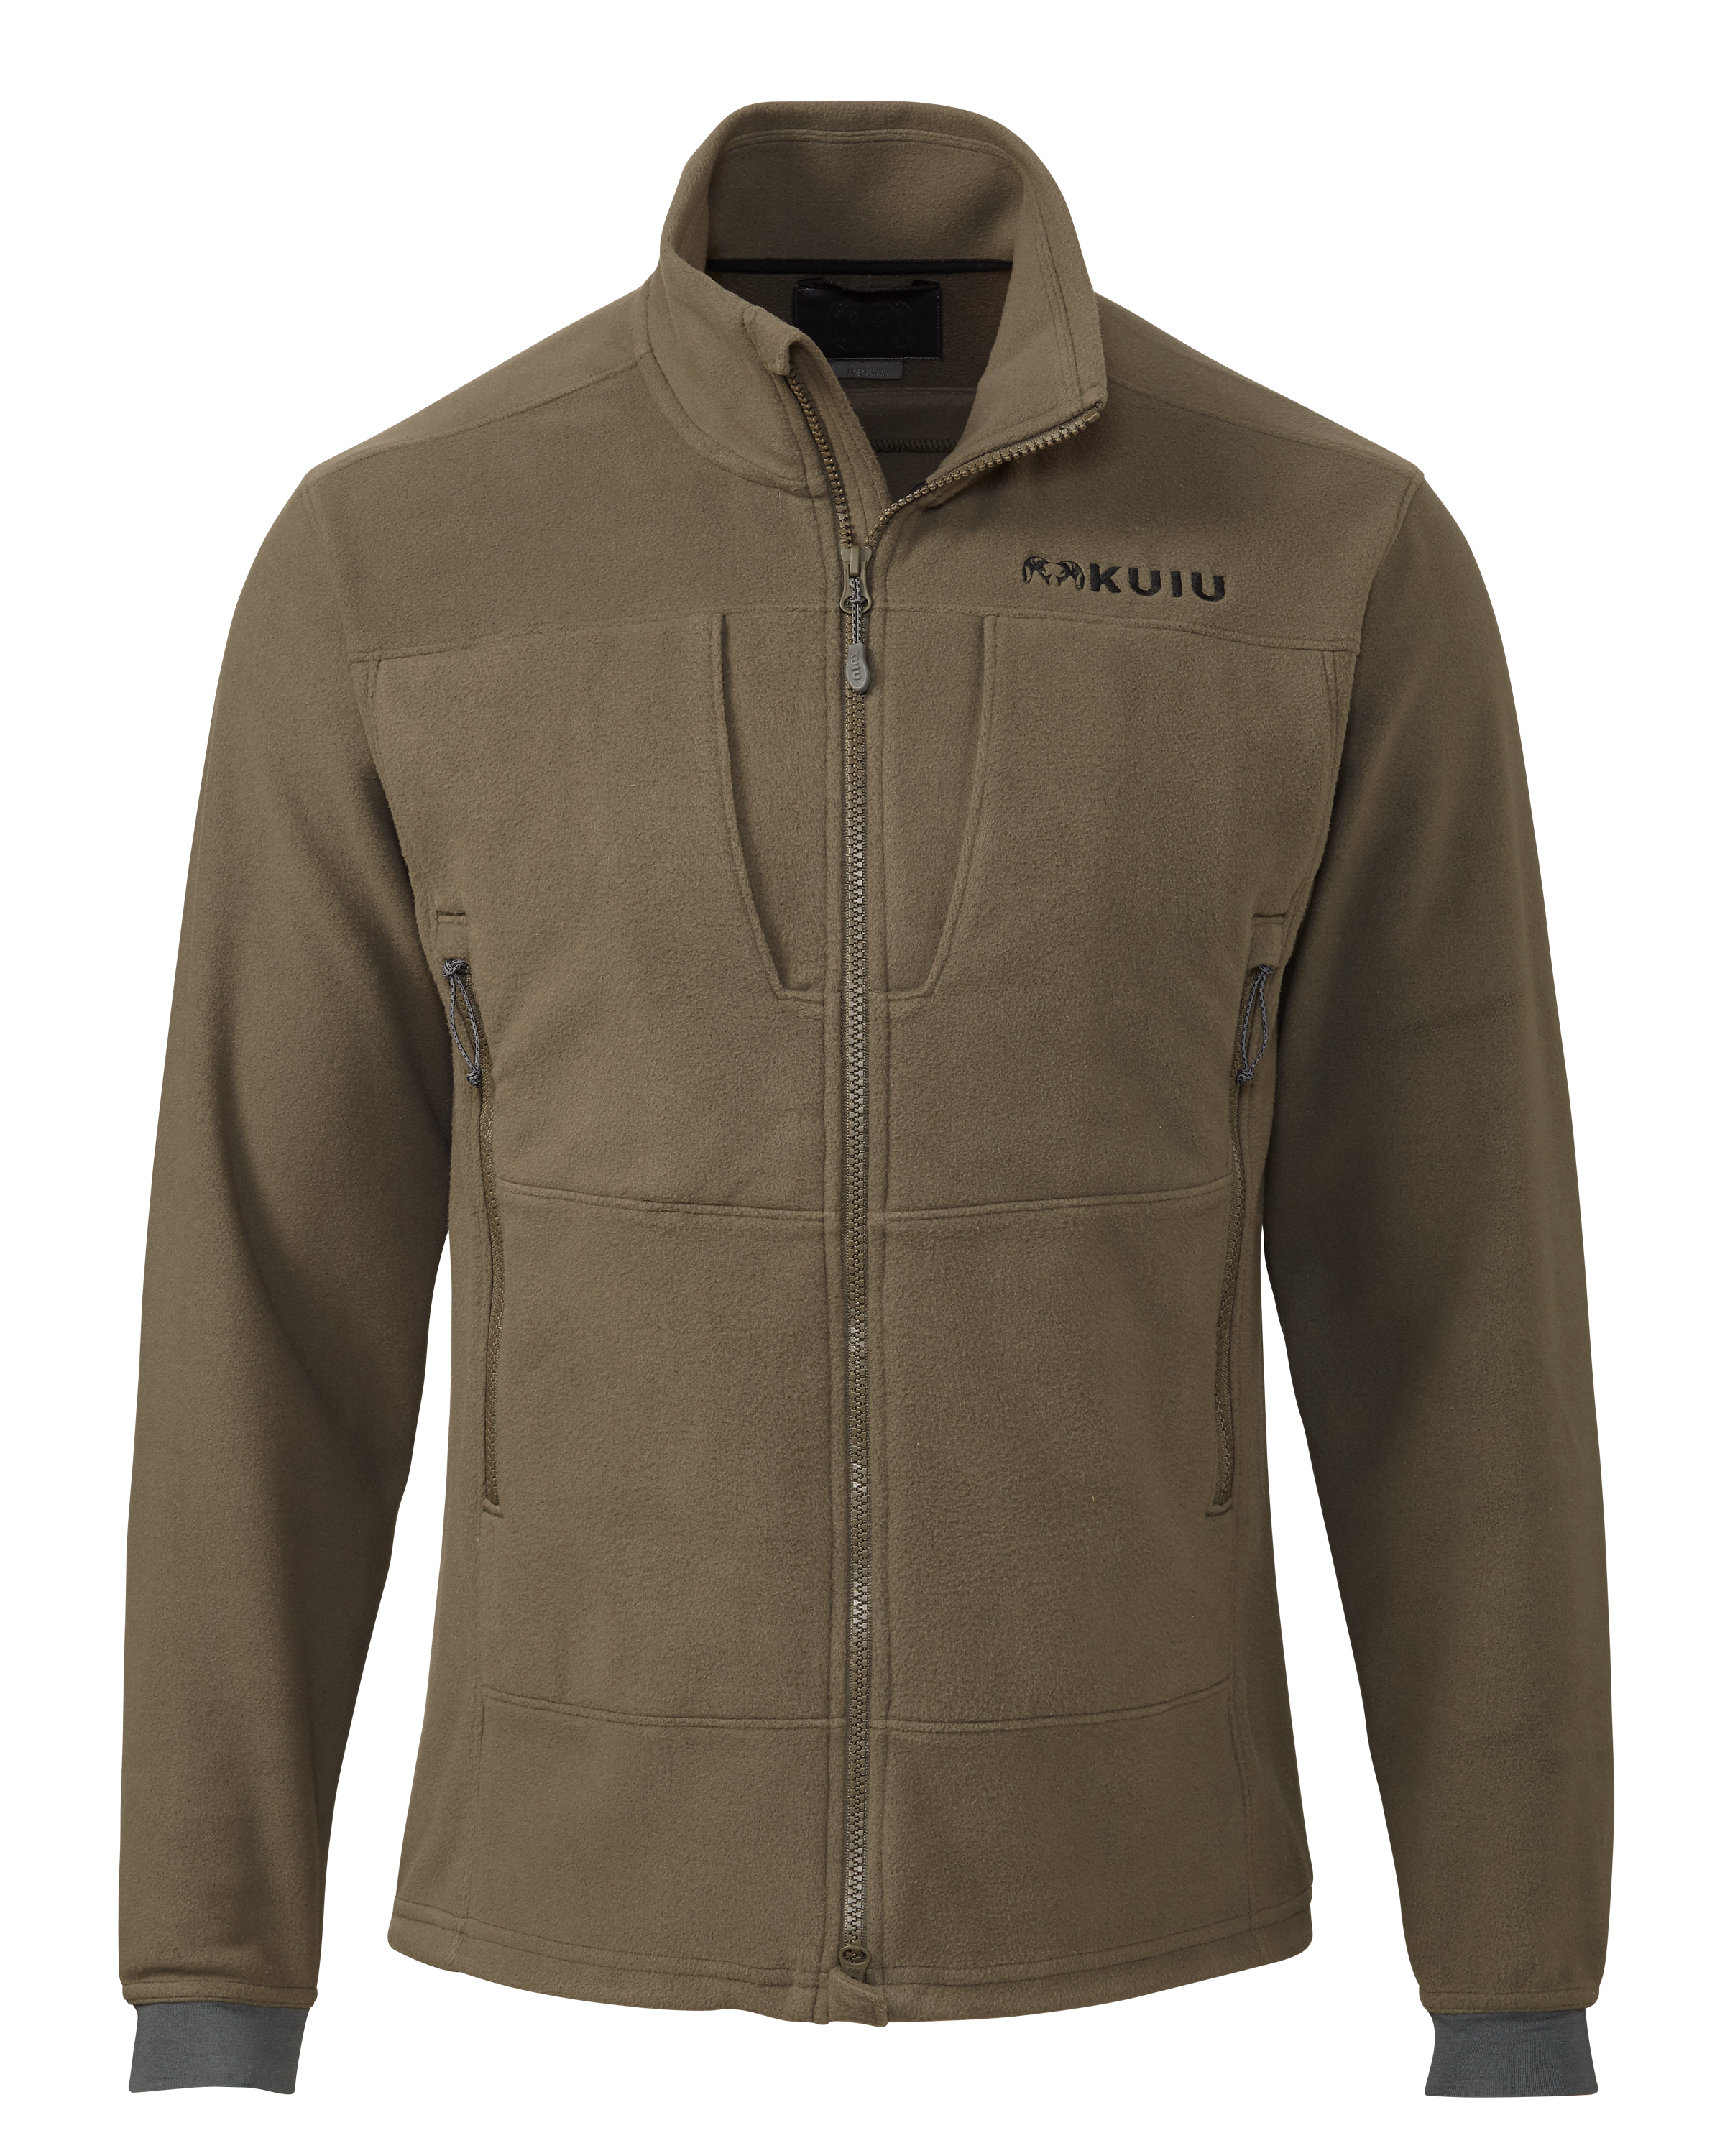 KUIU Wind Pro Fleece Full Zip Hunting Jacket in Ash | Size Medium